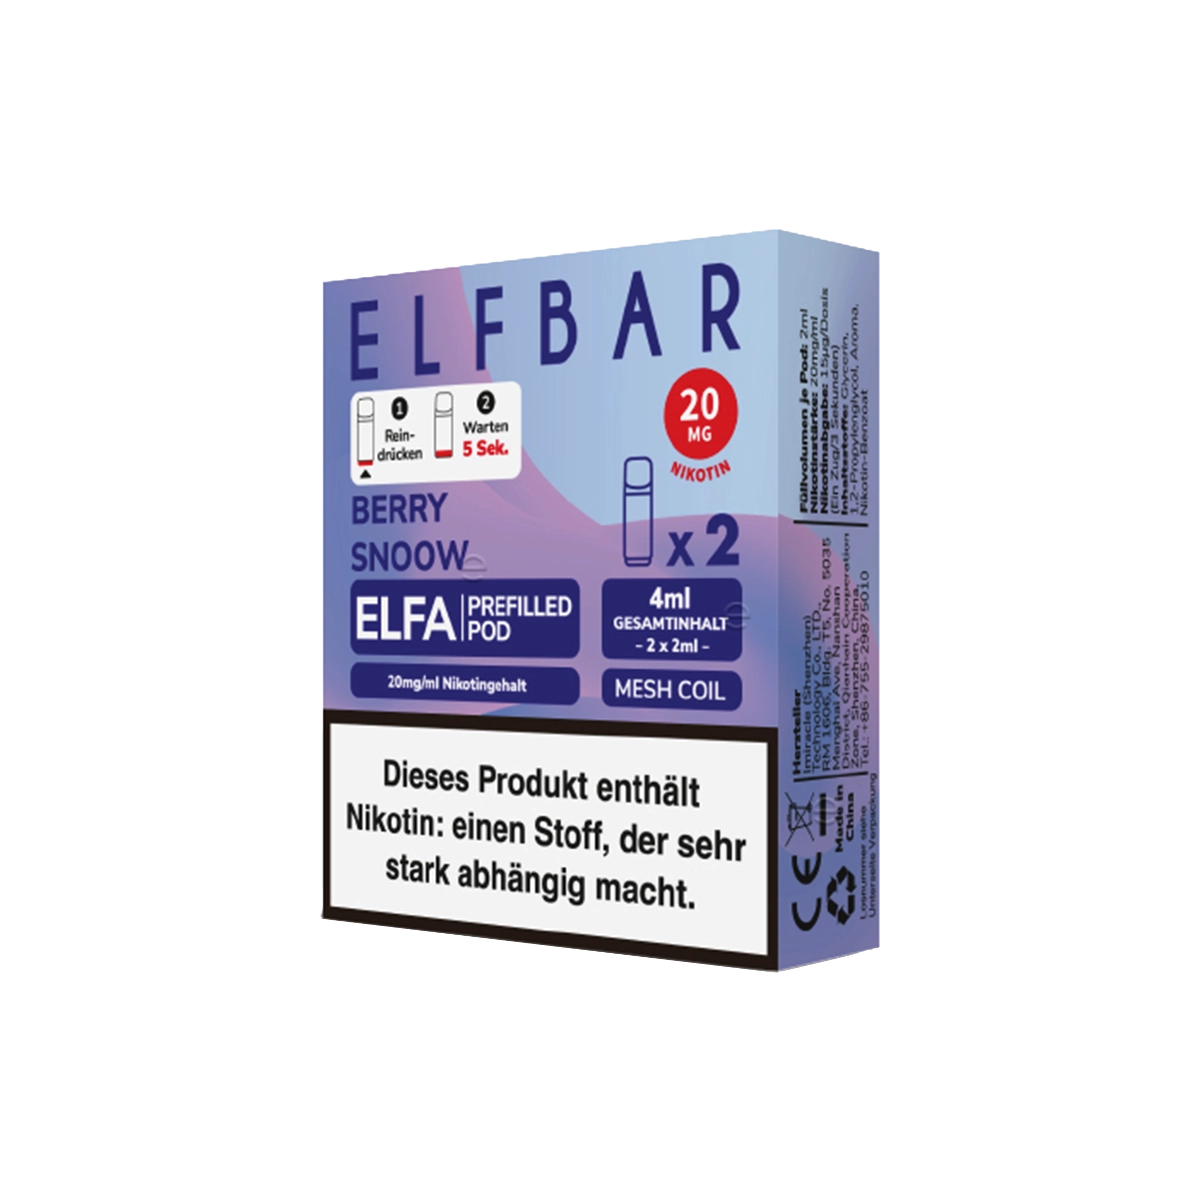 ELFBAR ELFA CP PODS - BLUEBERRY SNOW 20MG NIKOTIN 2ER PACK (10 STÜCK)